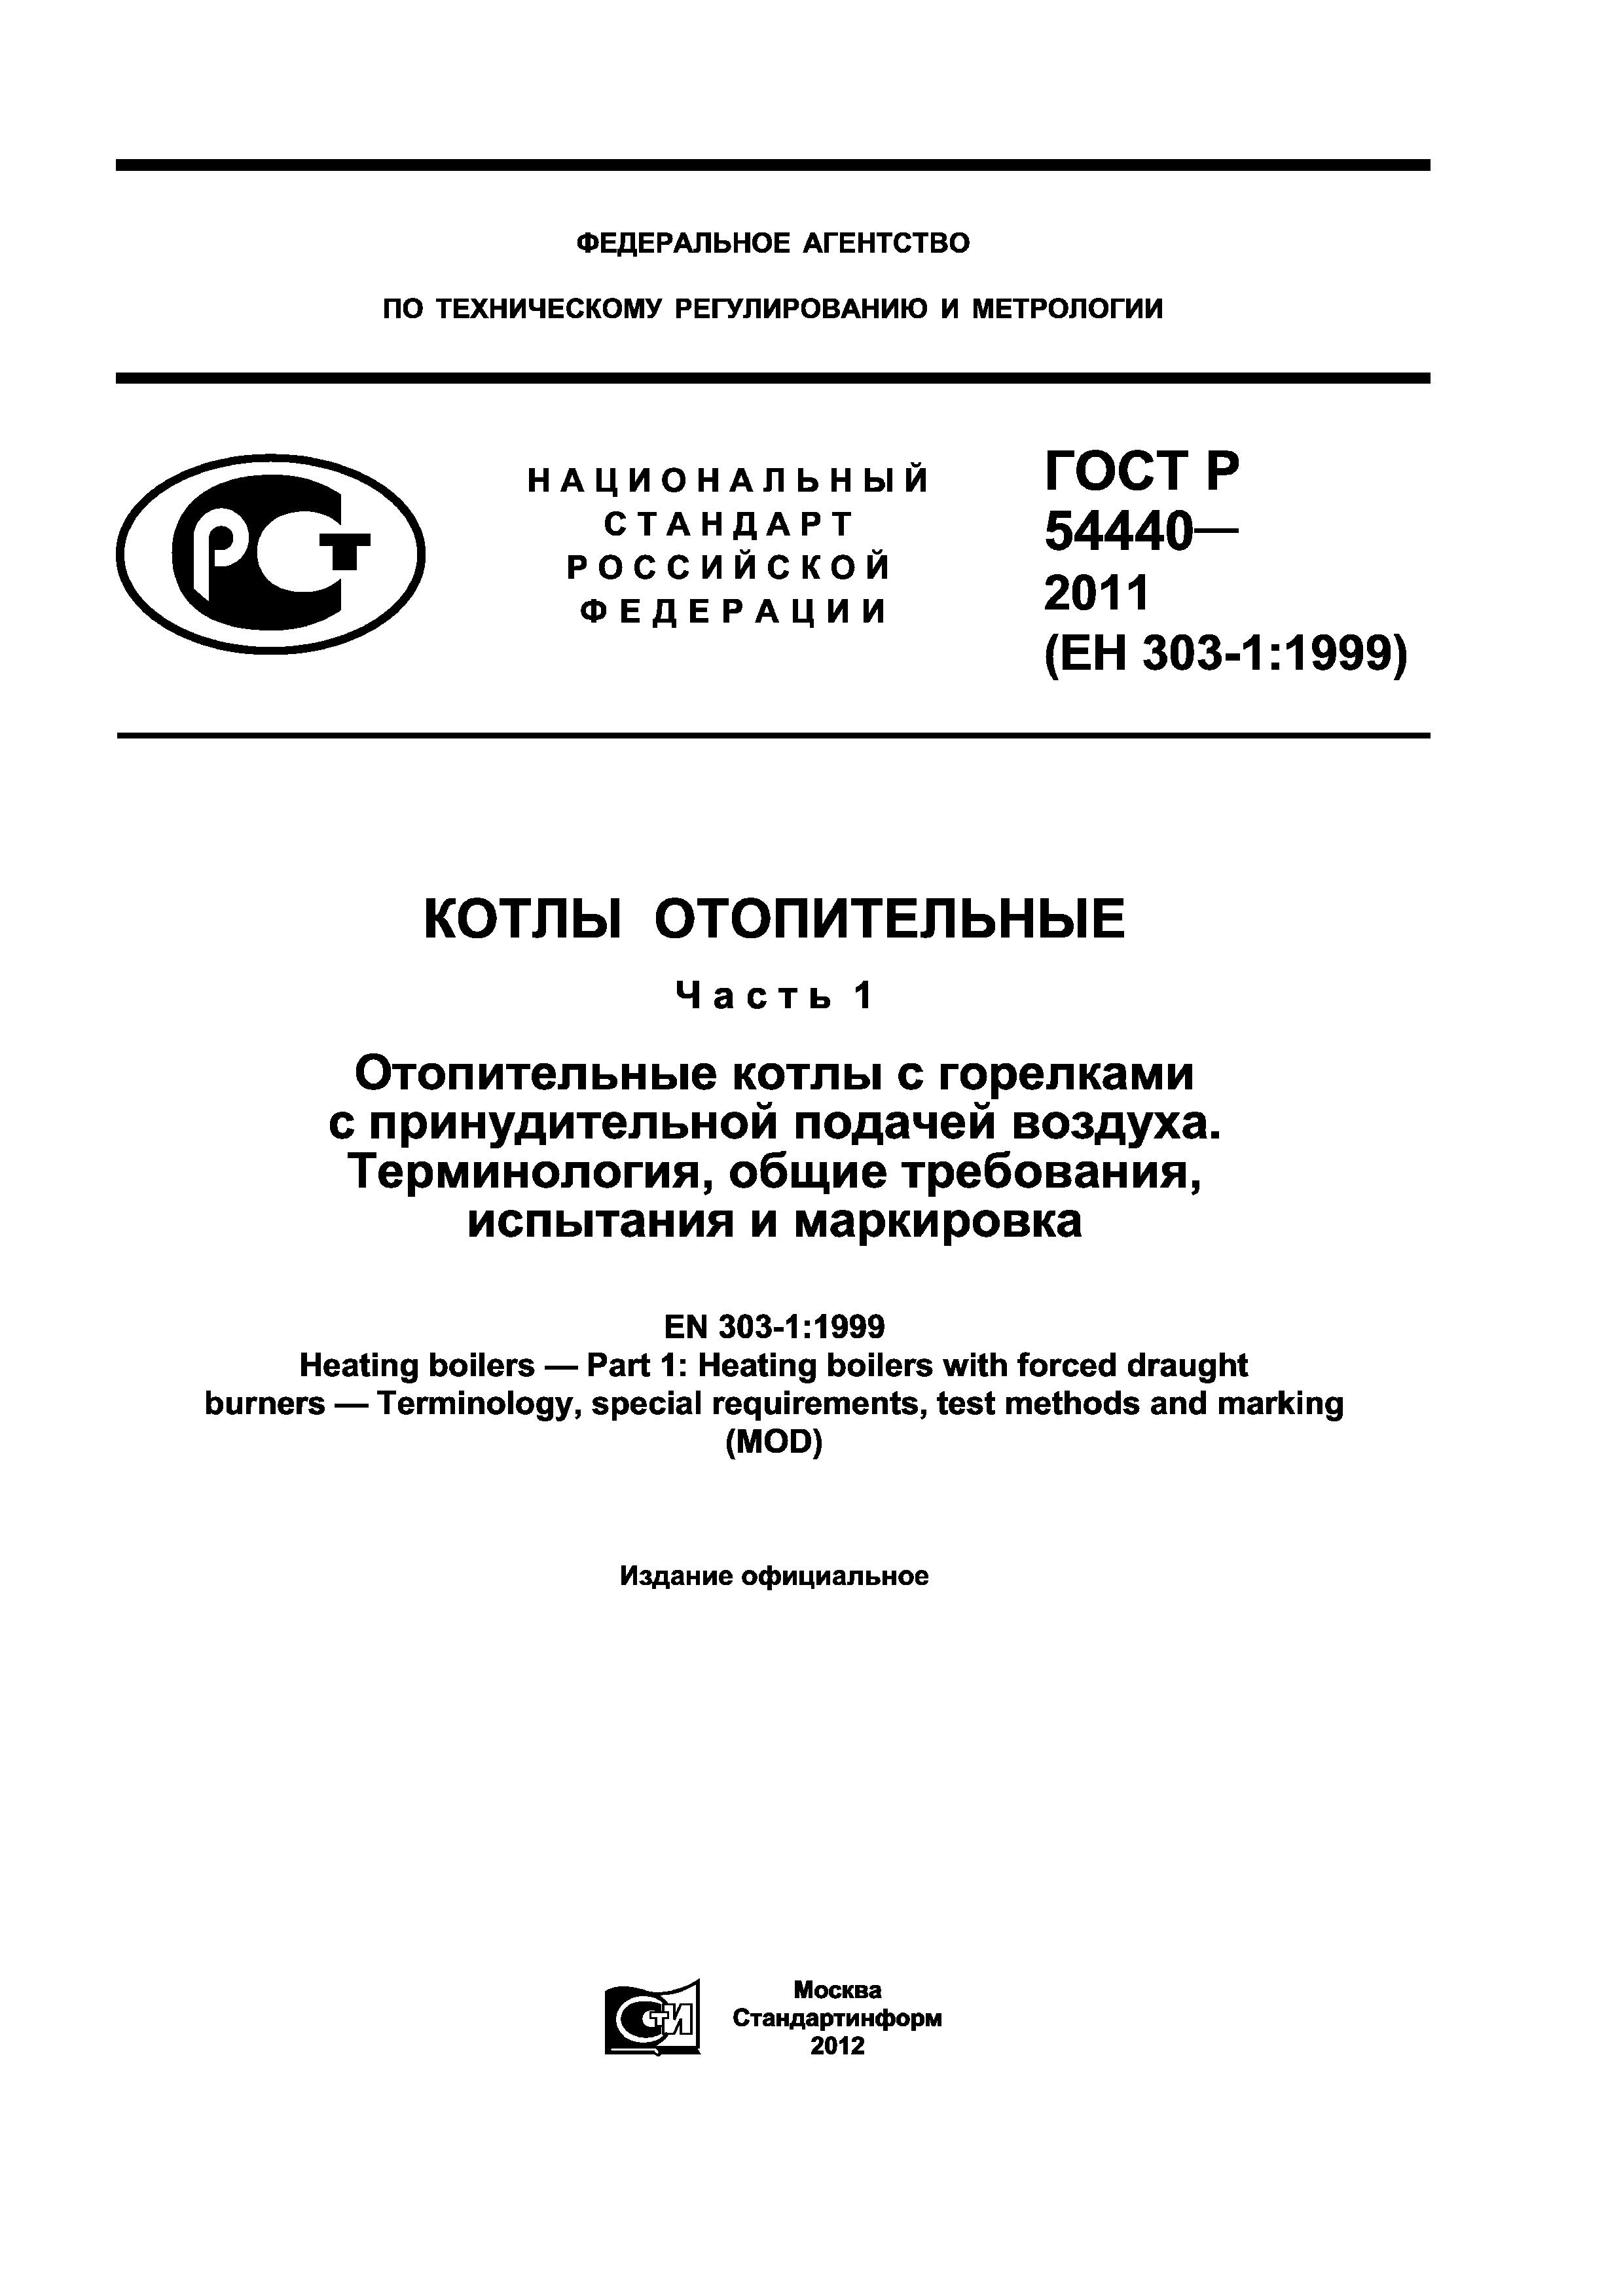 ГОСТ Р 54440-2011